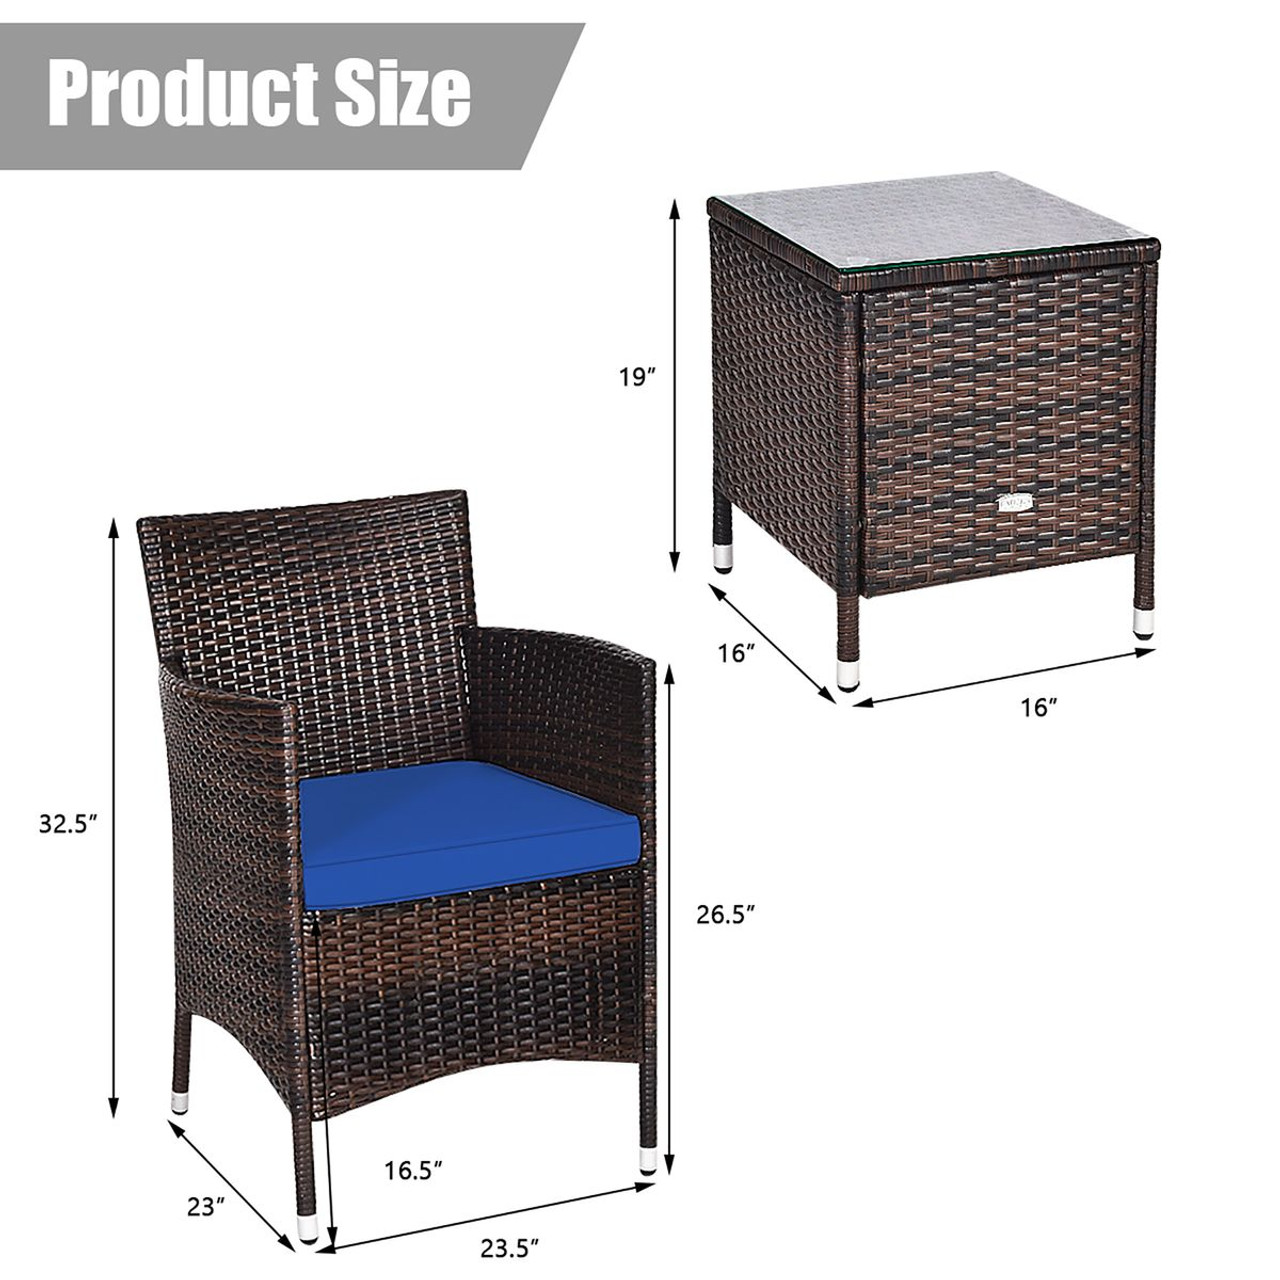 Costway Outdoor 3-Piece Rattan Wicker Furniture Set product image